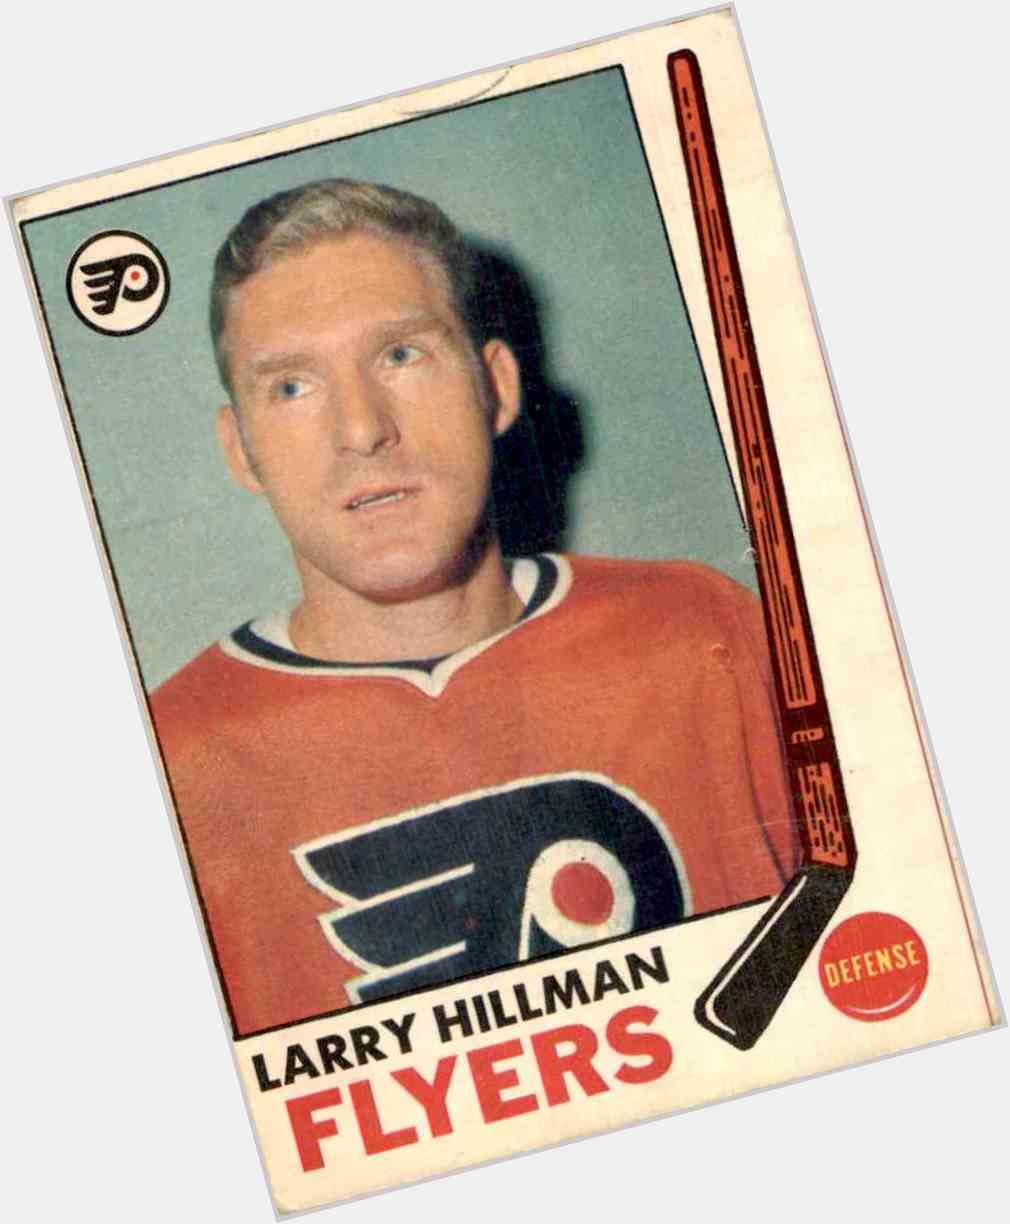 Larry Hillman Athletic body,  